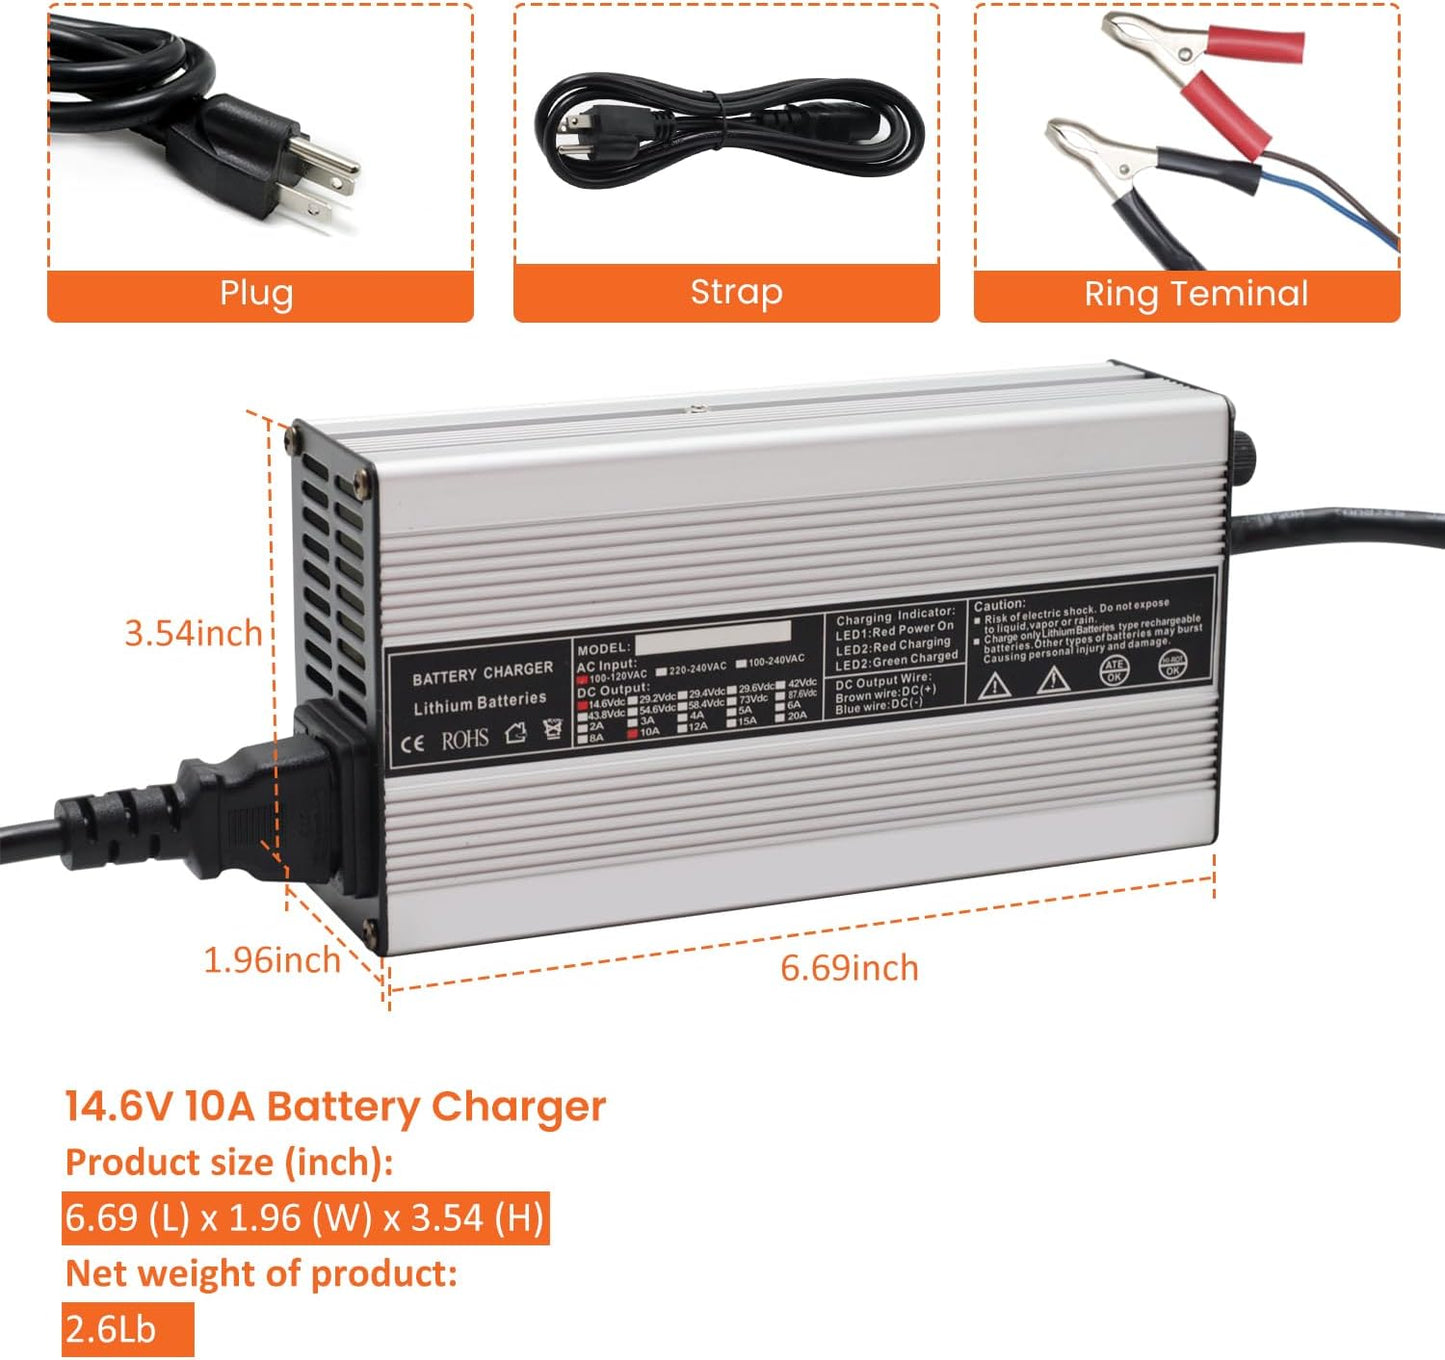 CHINS 12V 10A Lithium Battery Charger, Including 0V Charging Function, 14.6V 10A LiFePO4 Battery Charger, Special for 12V LiFePO4 Battery